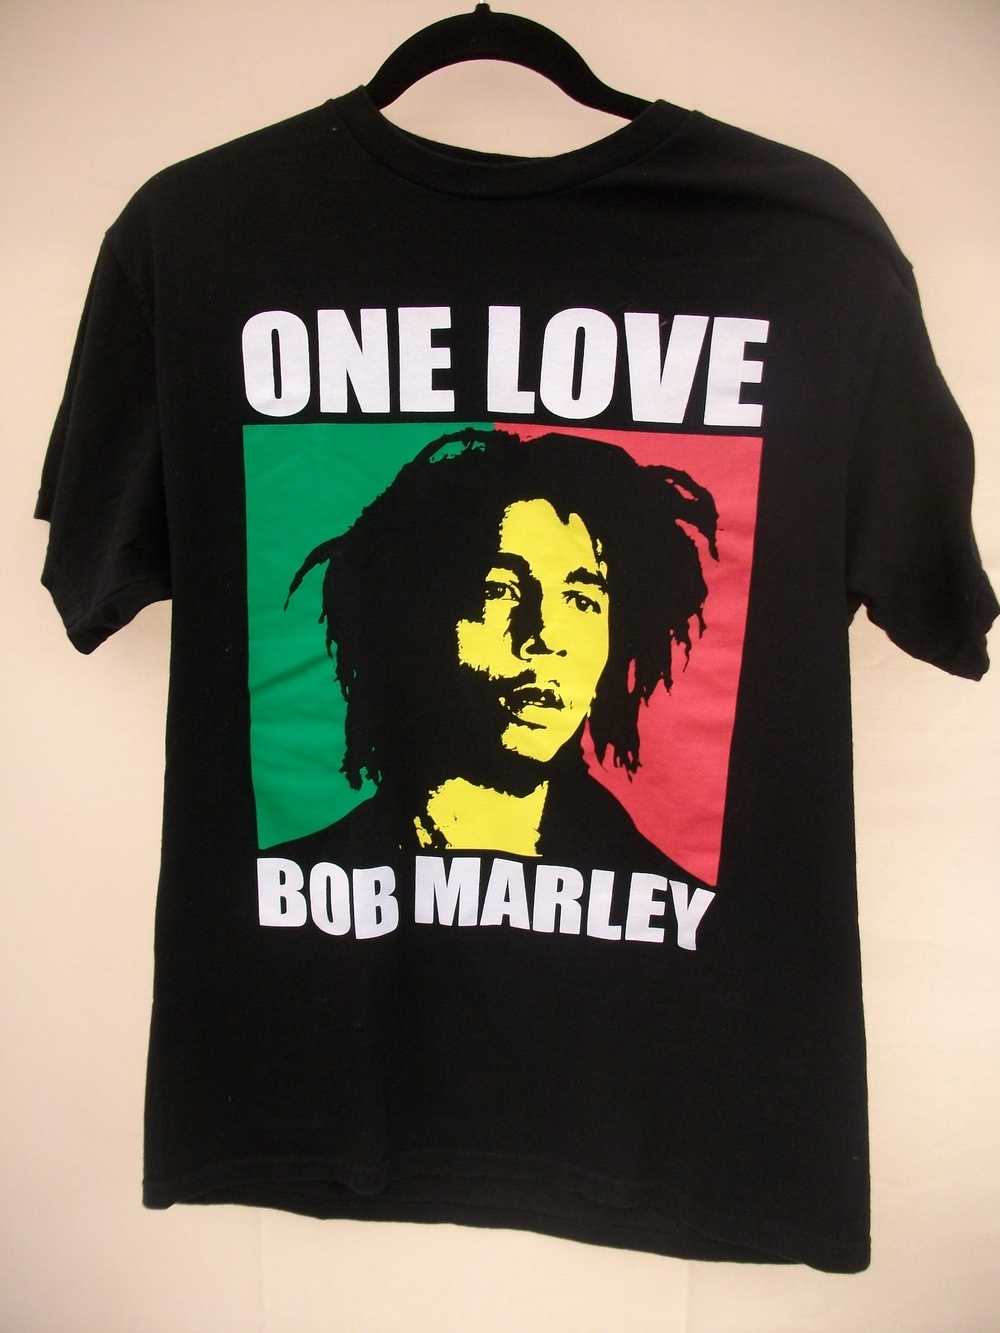 Bob Marley × Vintage Bob Marley "One Love" T-Shirt - image 1